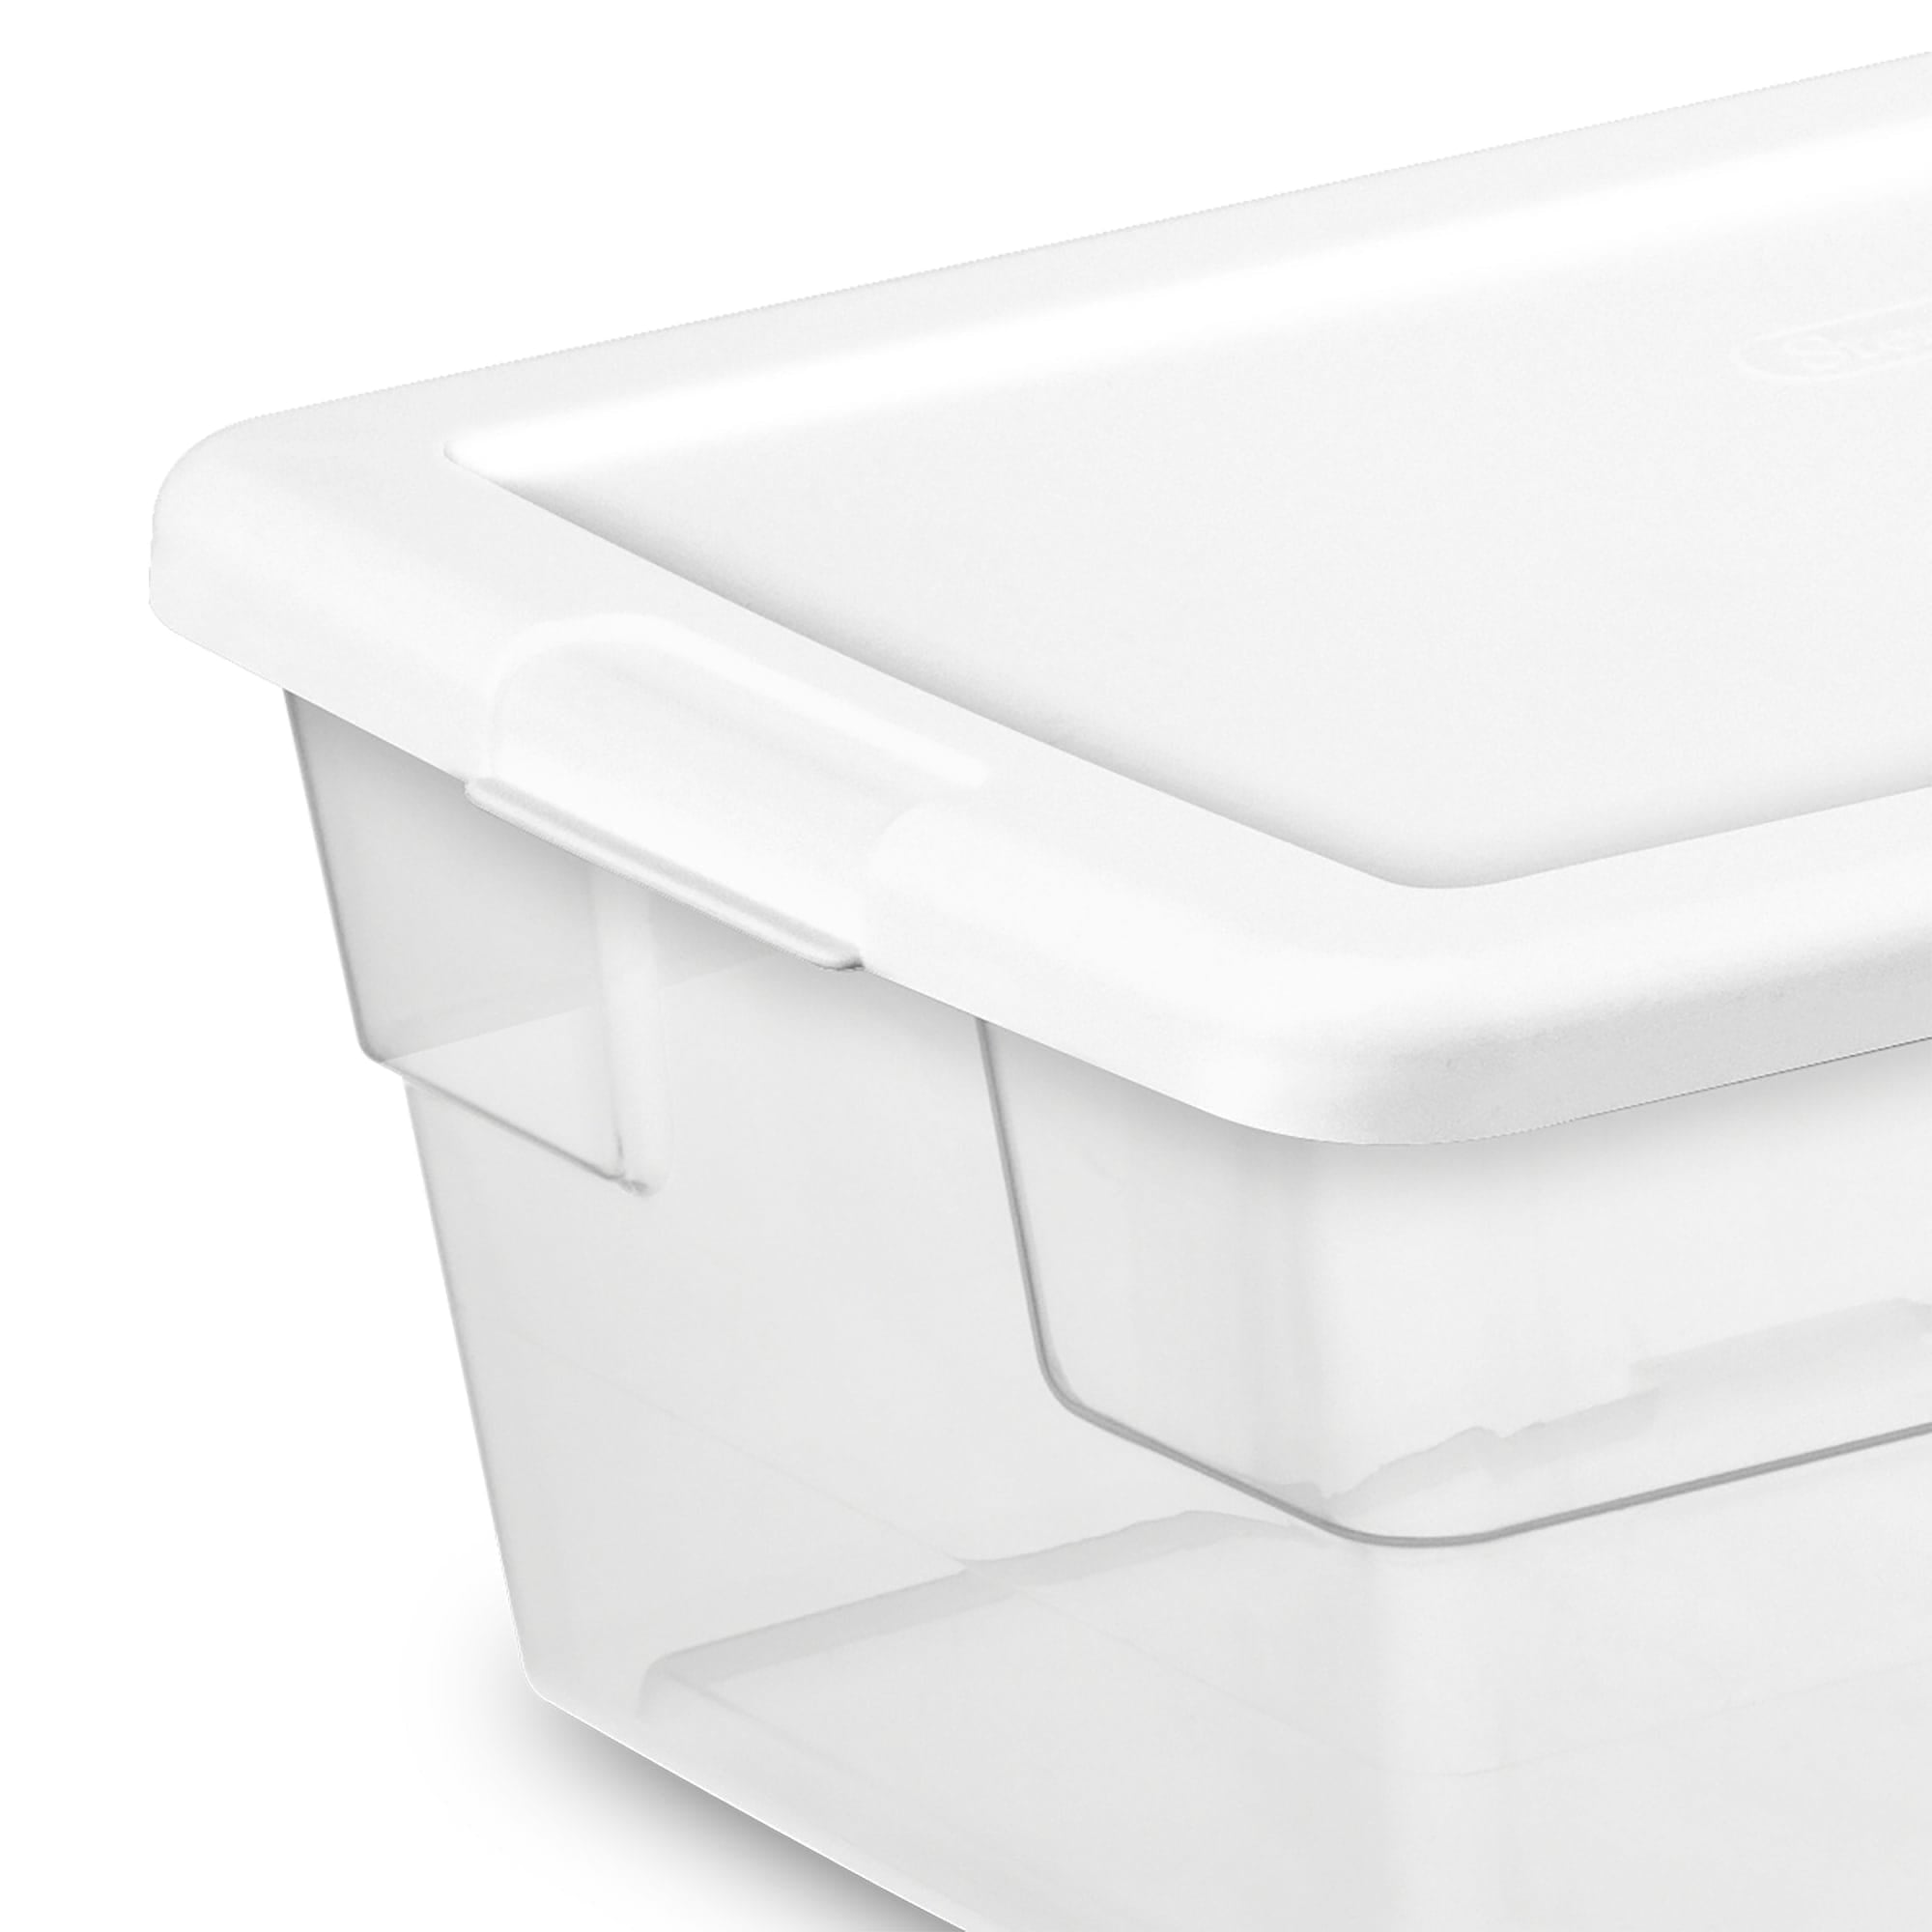 Sterilite 6 Quart / 5.7 Liter Storage Box $3.00 EACH, CASE PACK OF 12